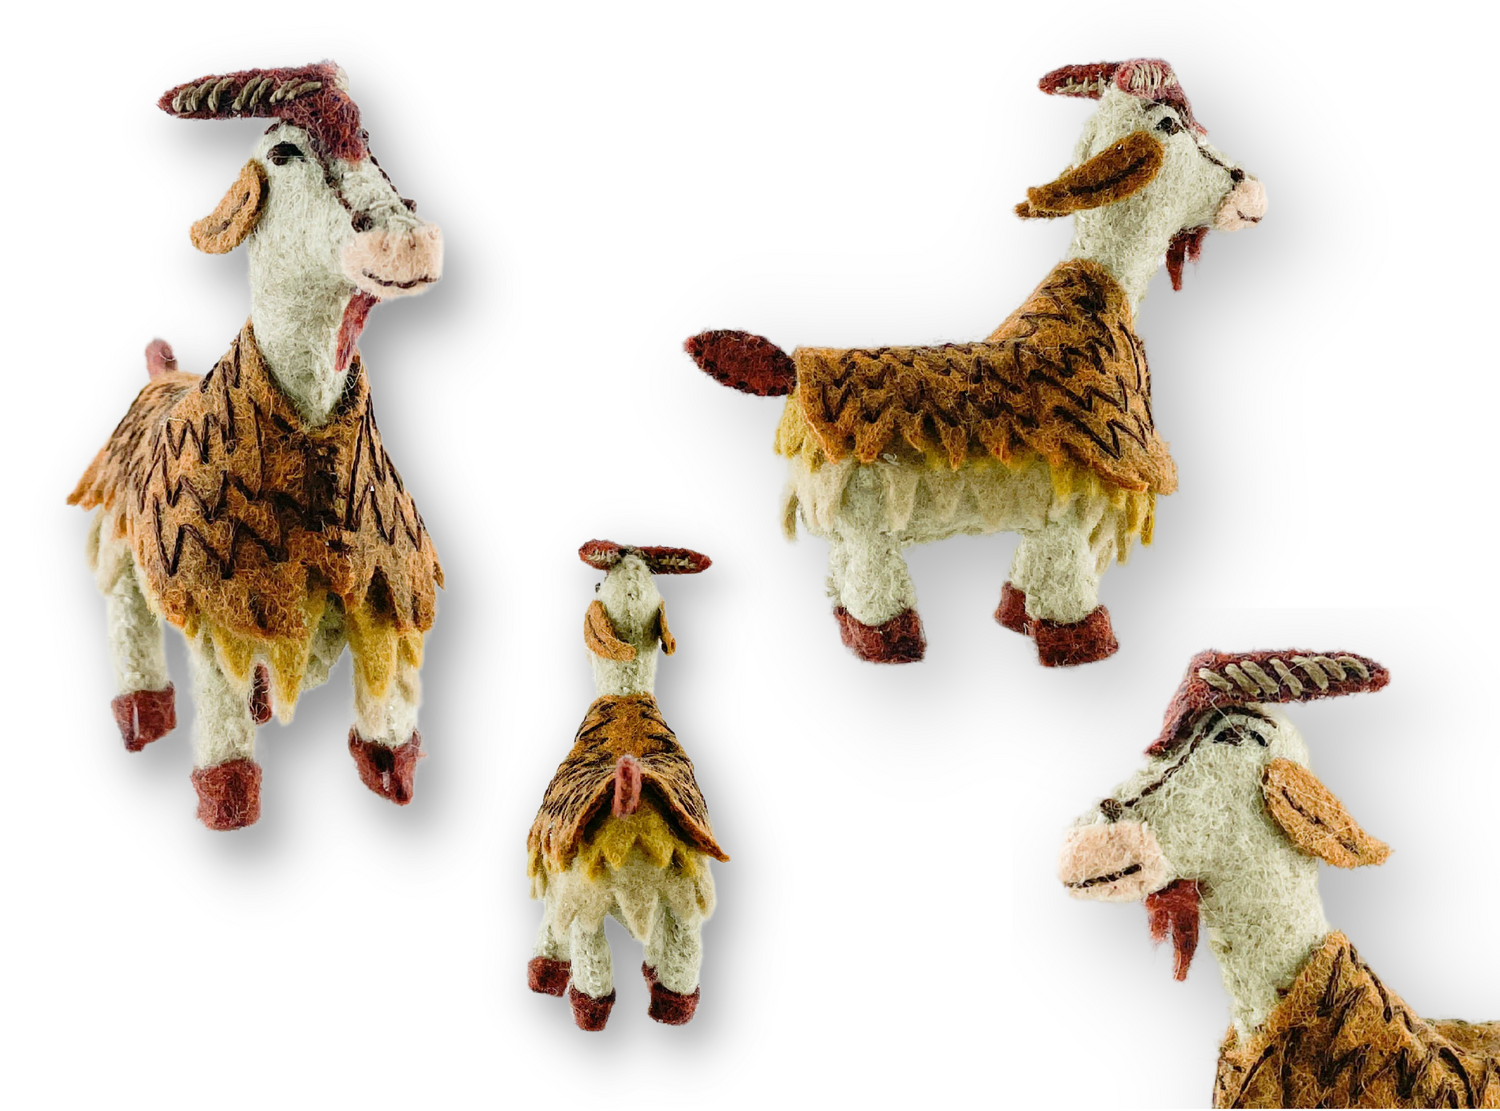 Nativity Scene Series PDF Pattern The Goat